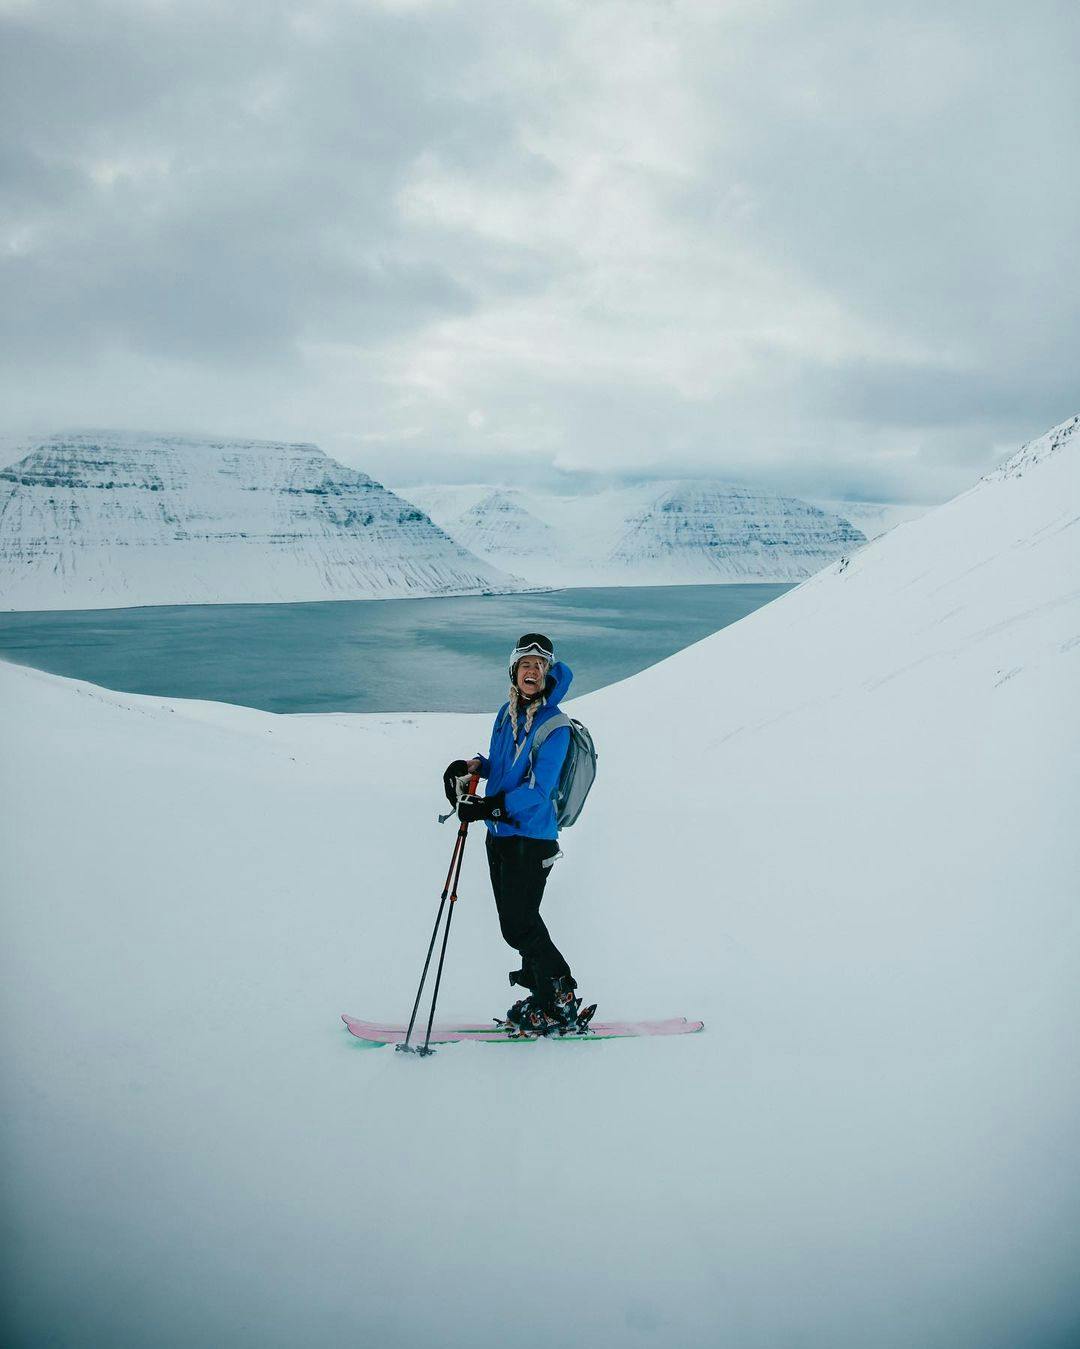 Asa ski touring in Iceland